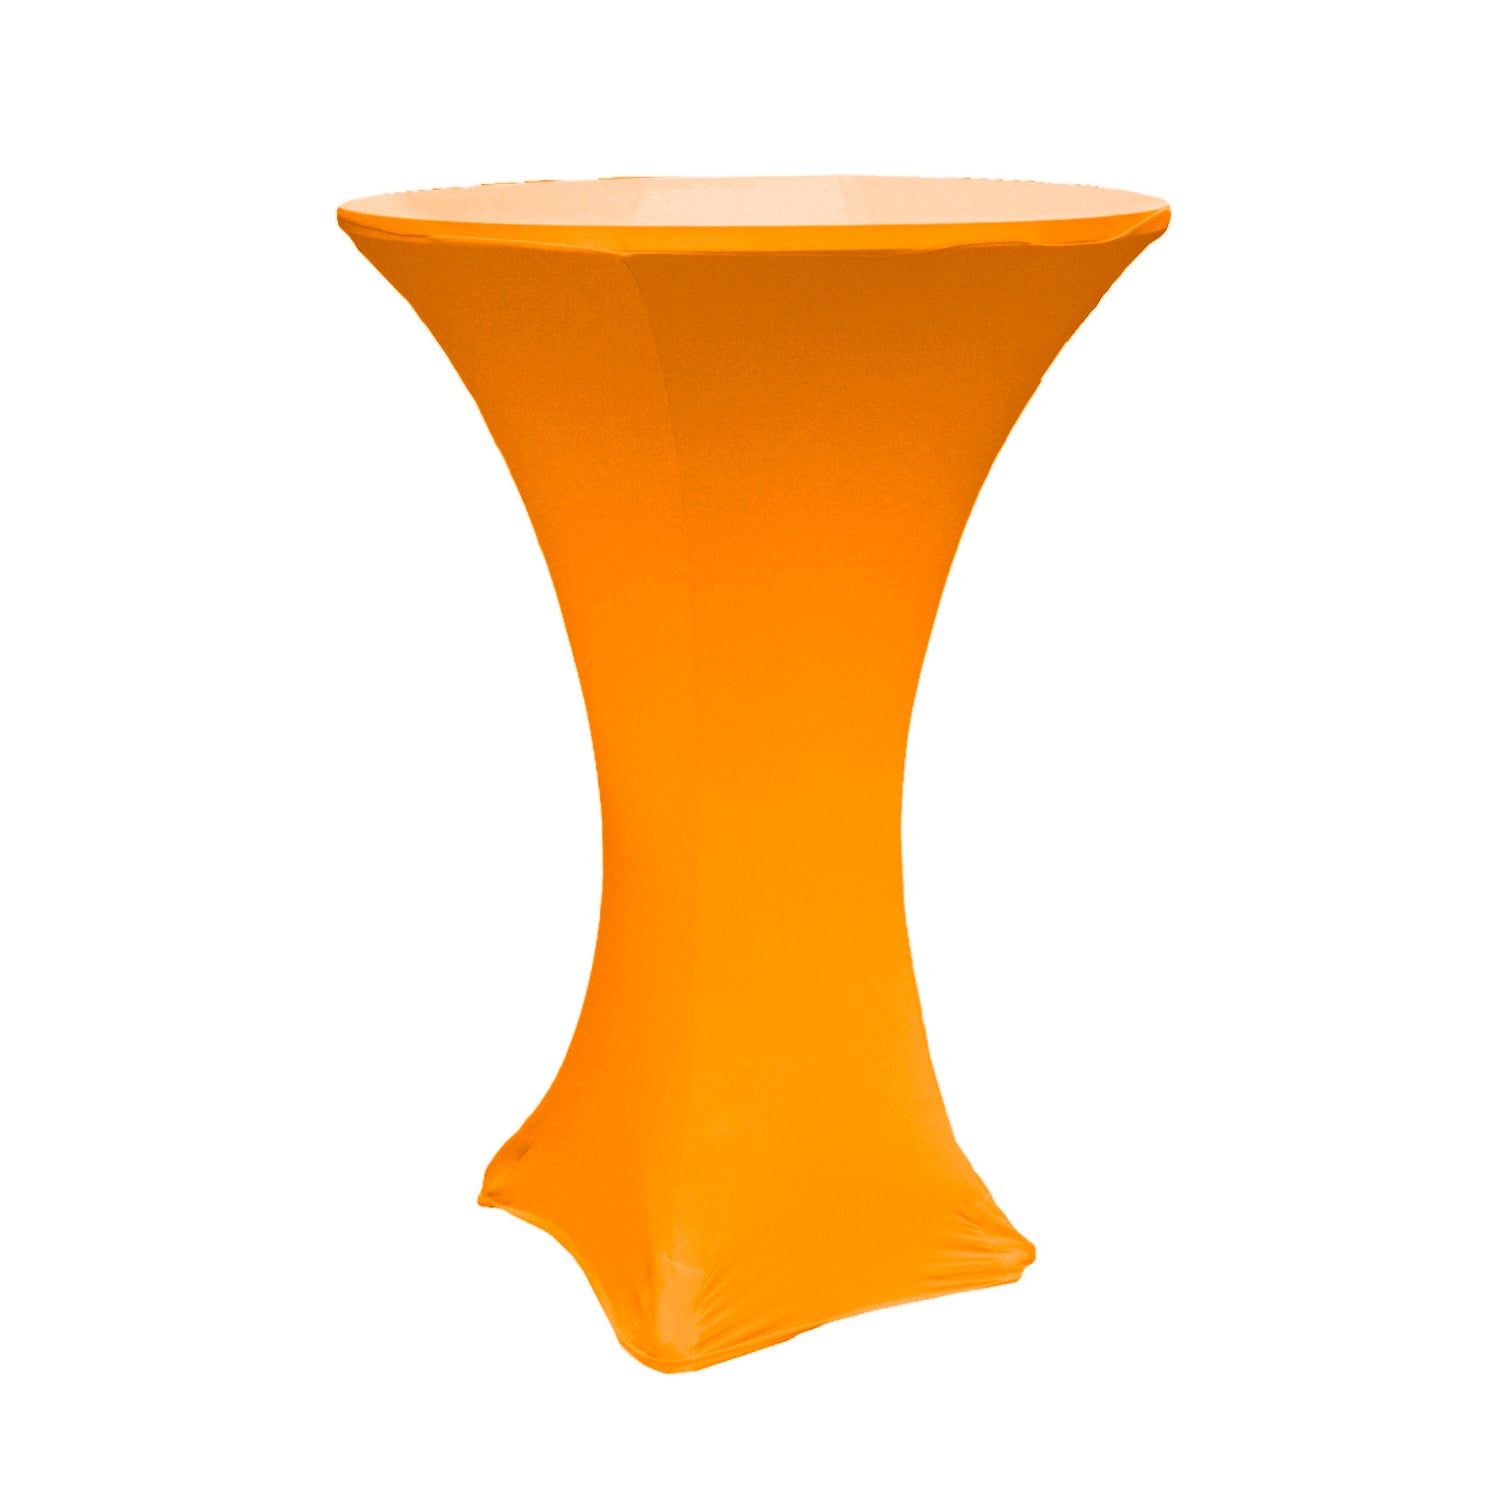 Spandex Cocktail Table Cover 30" Round - Orange - CV Linens